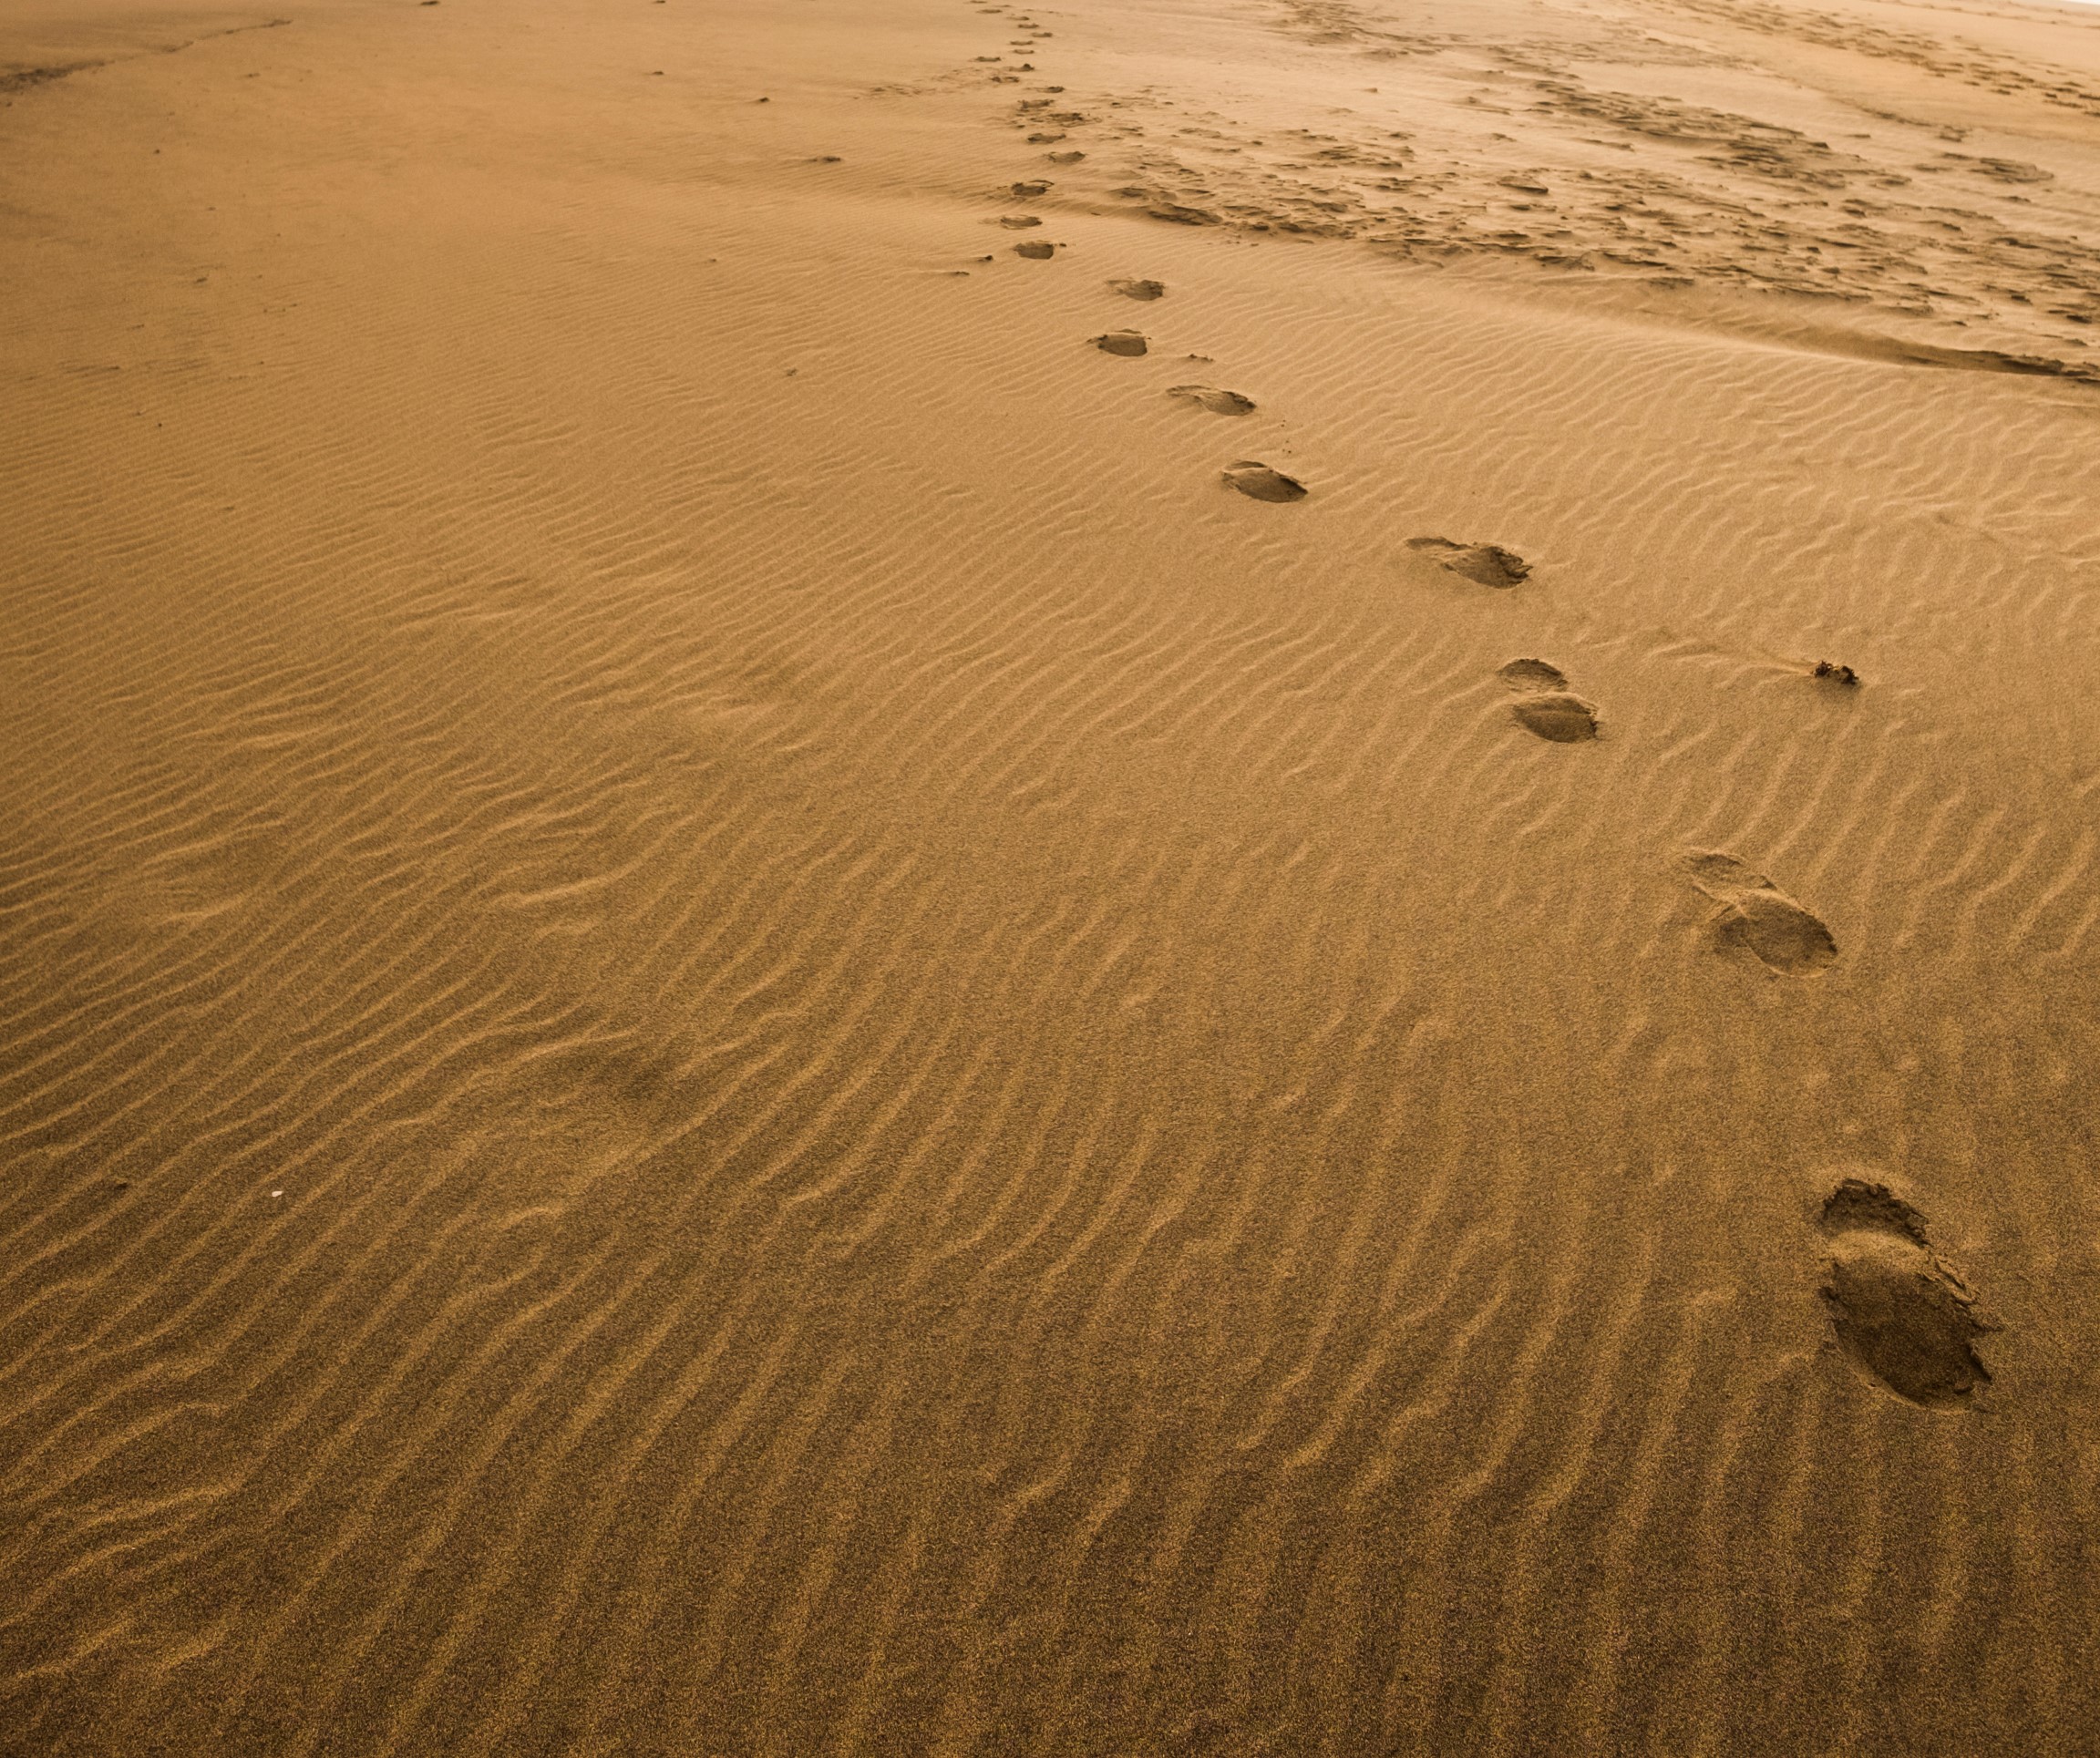 footprint-at-the-beach-for-explore-in-wild-scenic-2021-09-02-02-49-09-utc.jpg